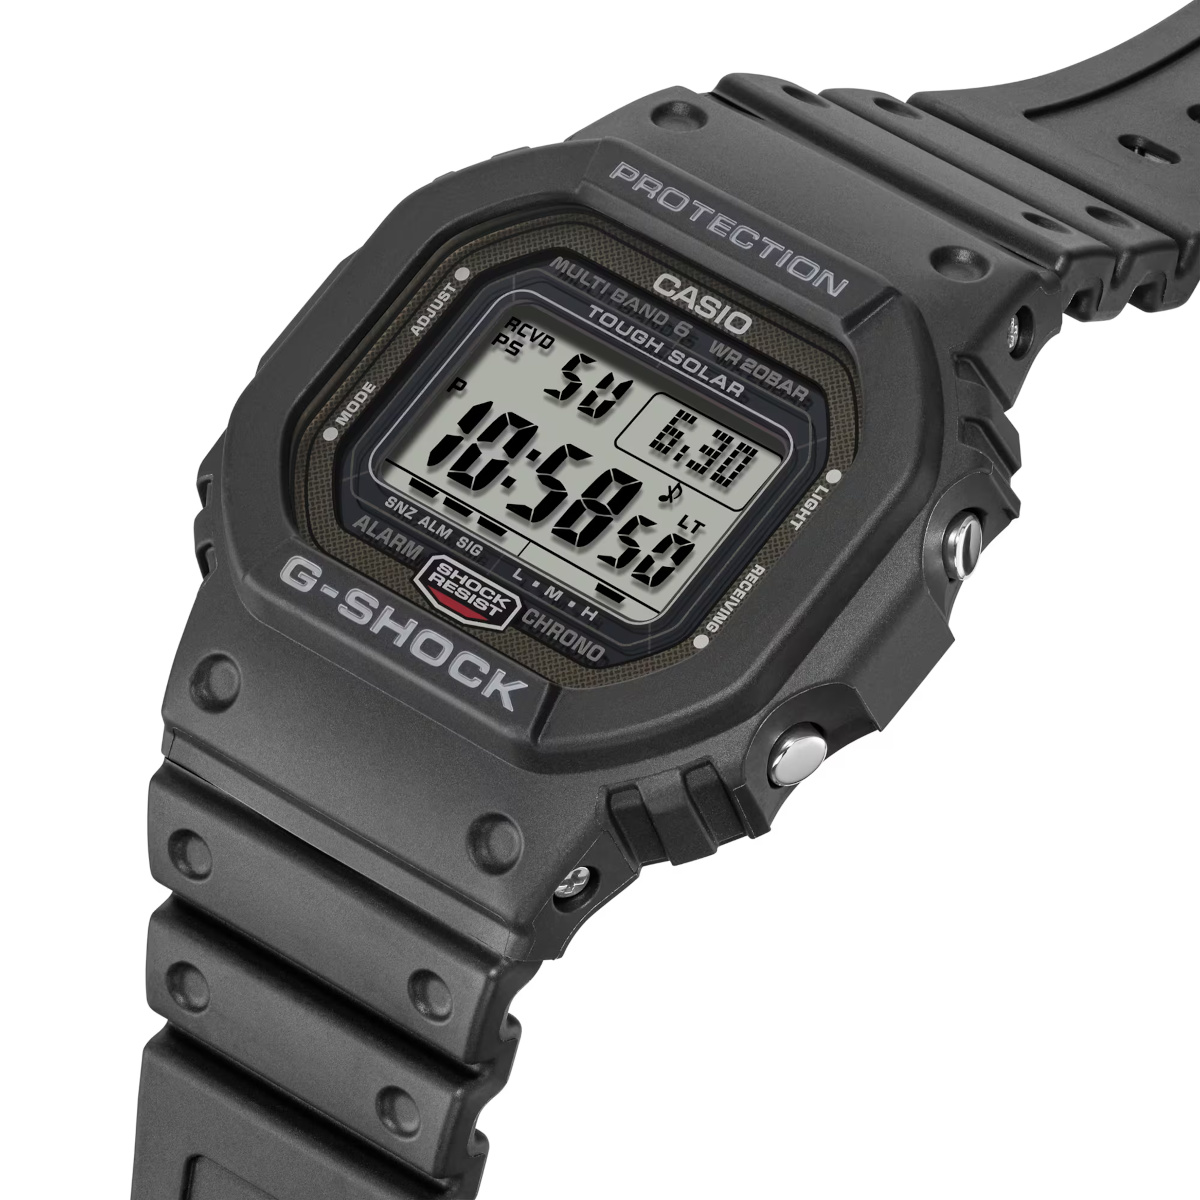 G-SHOCK G-SHOCK/(M)GW-M5610U-1JF/カシオ ブリッジ アクセサリー・腕時計 腕時計 ブラック【送料無料】 メンズ腕時計